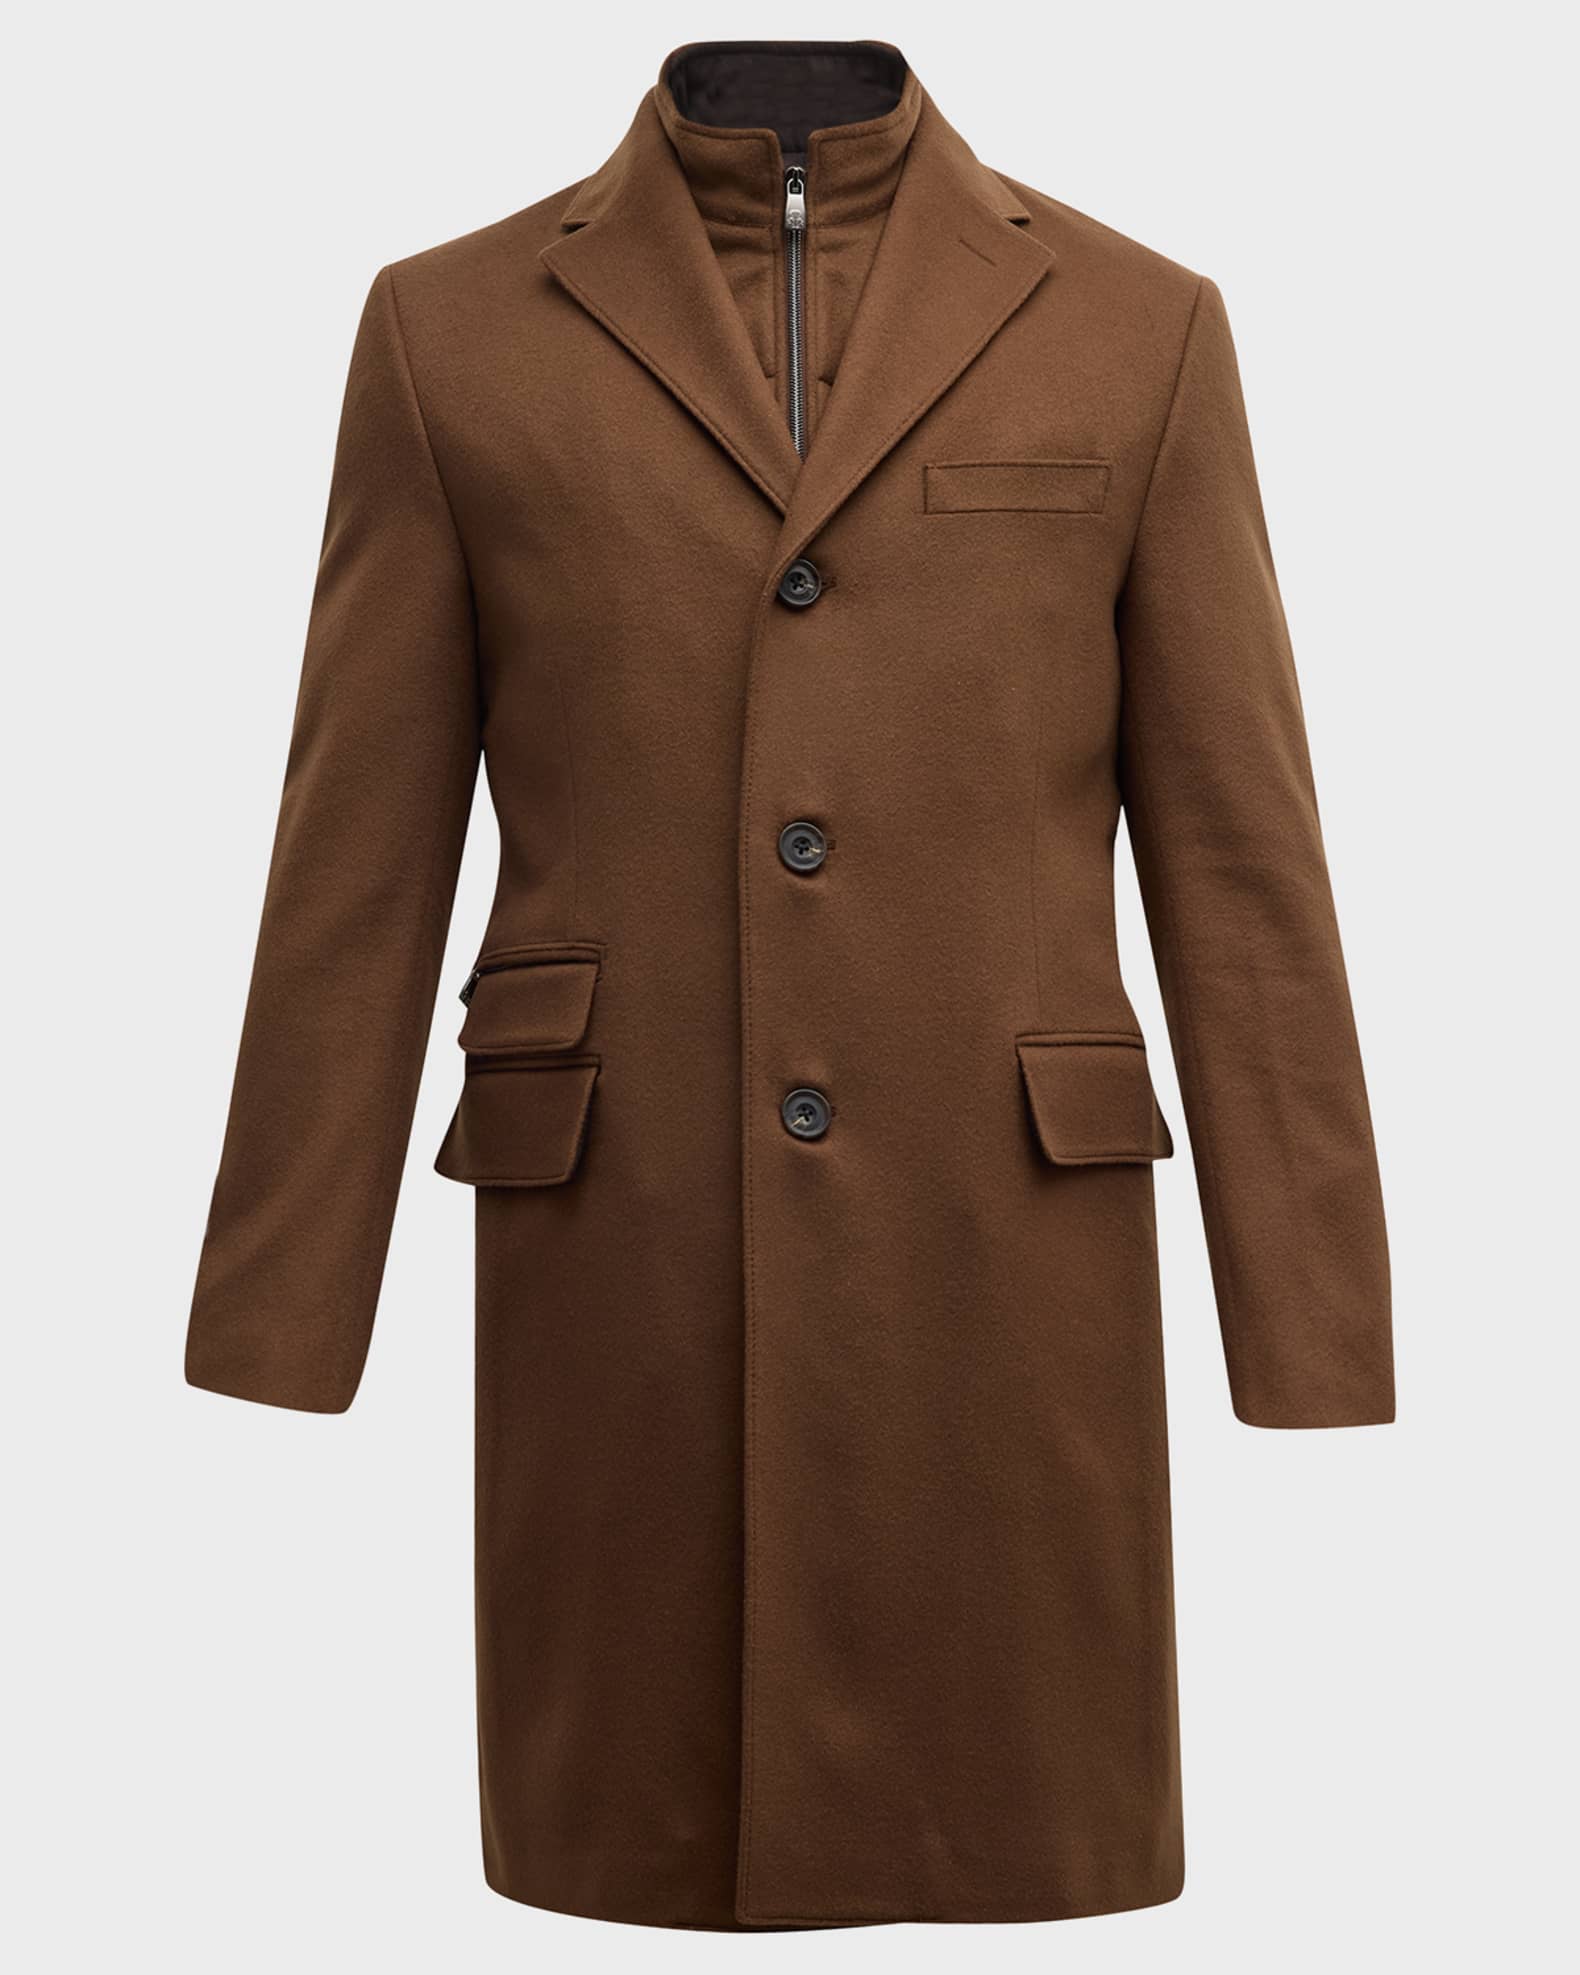 Corneliani Men's Wool Overcoat with Detachable Liner | Neiman Marcus